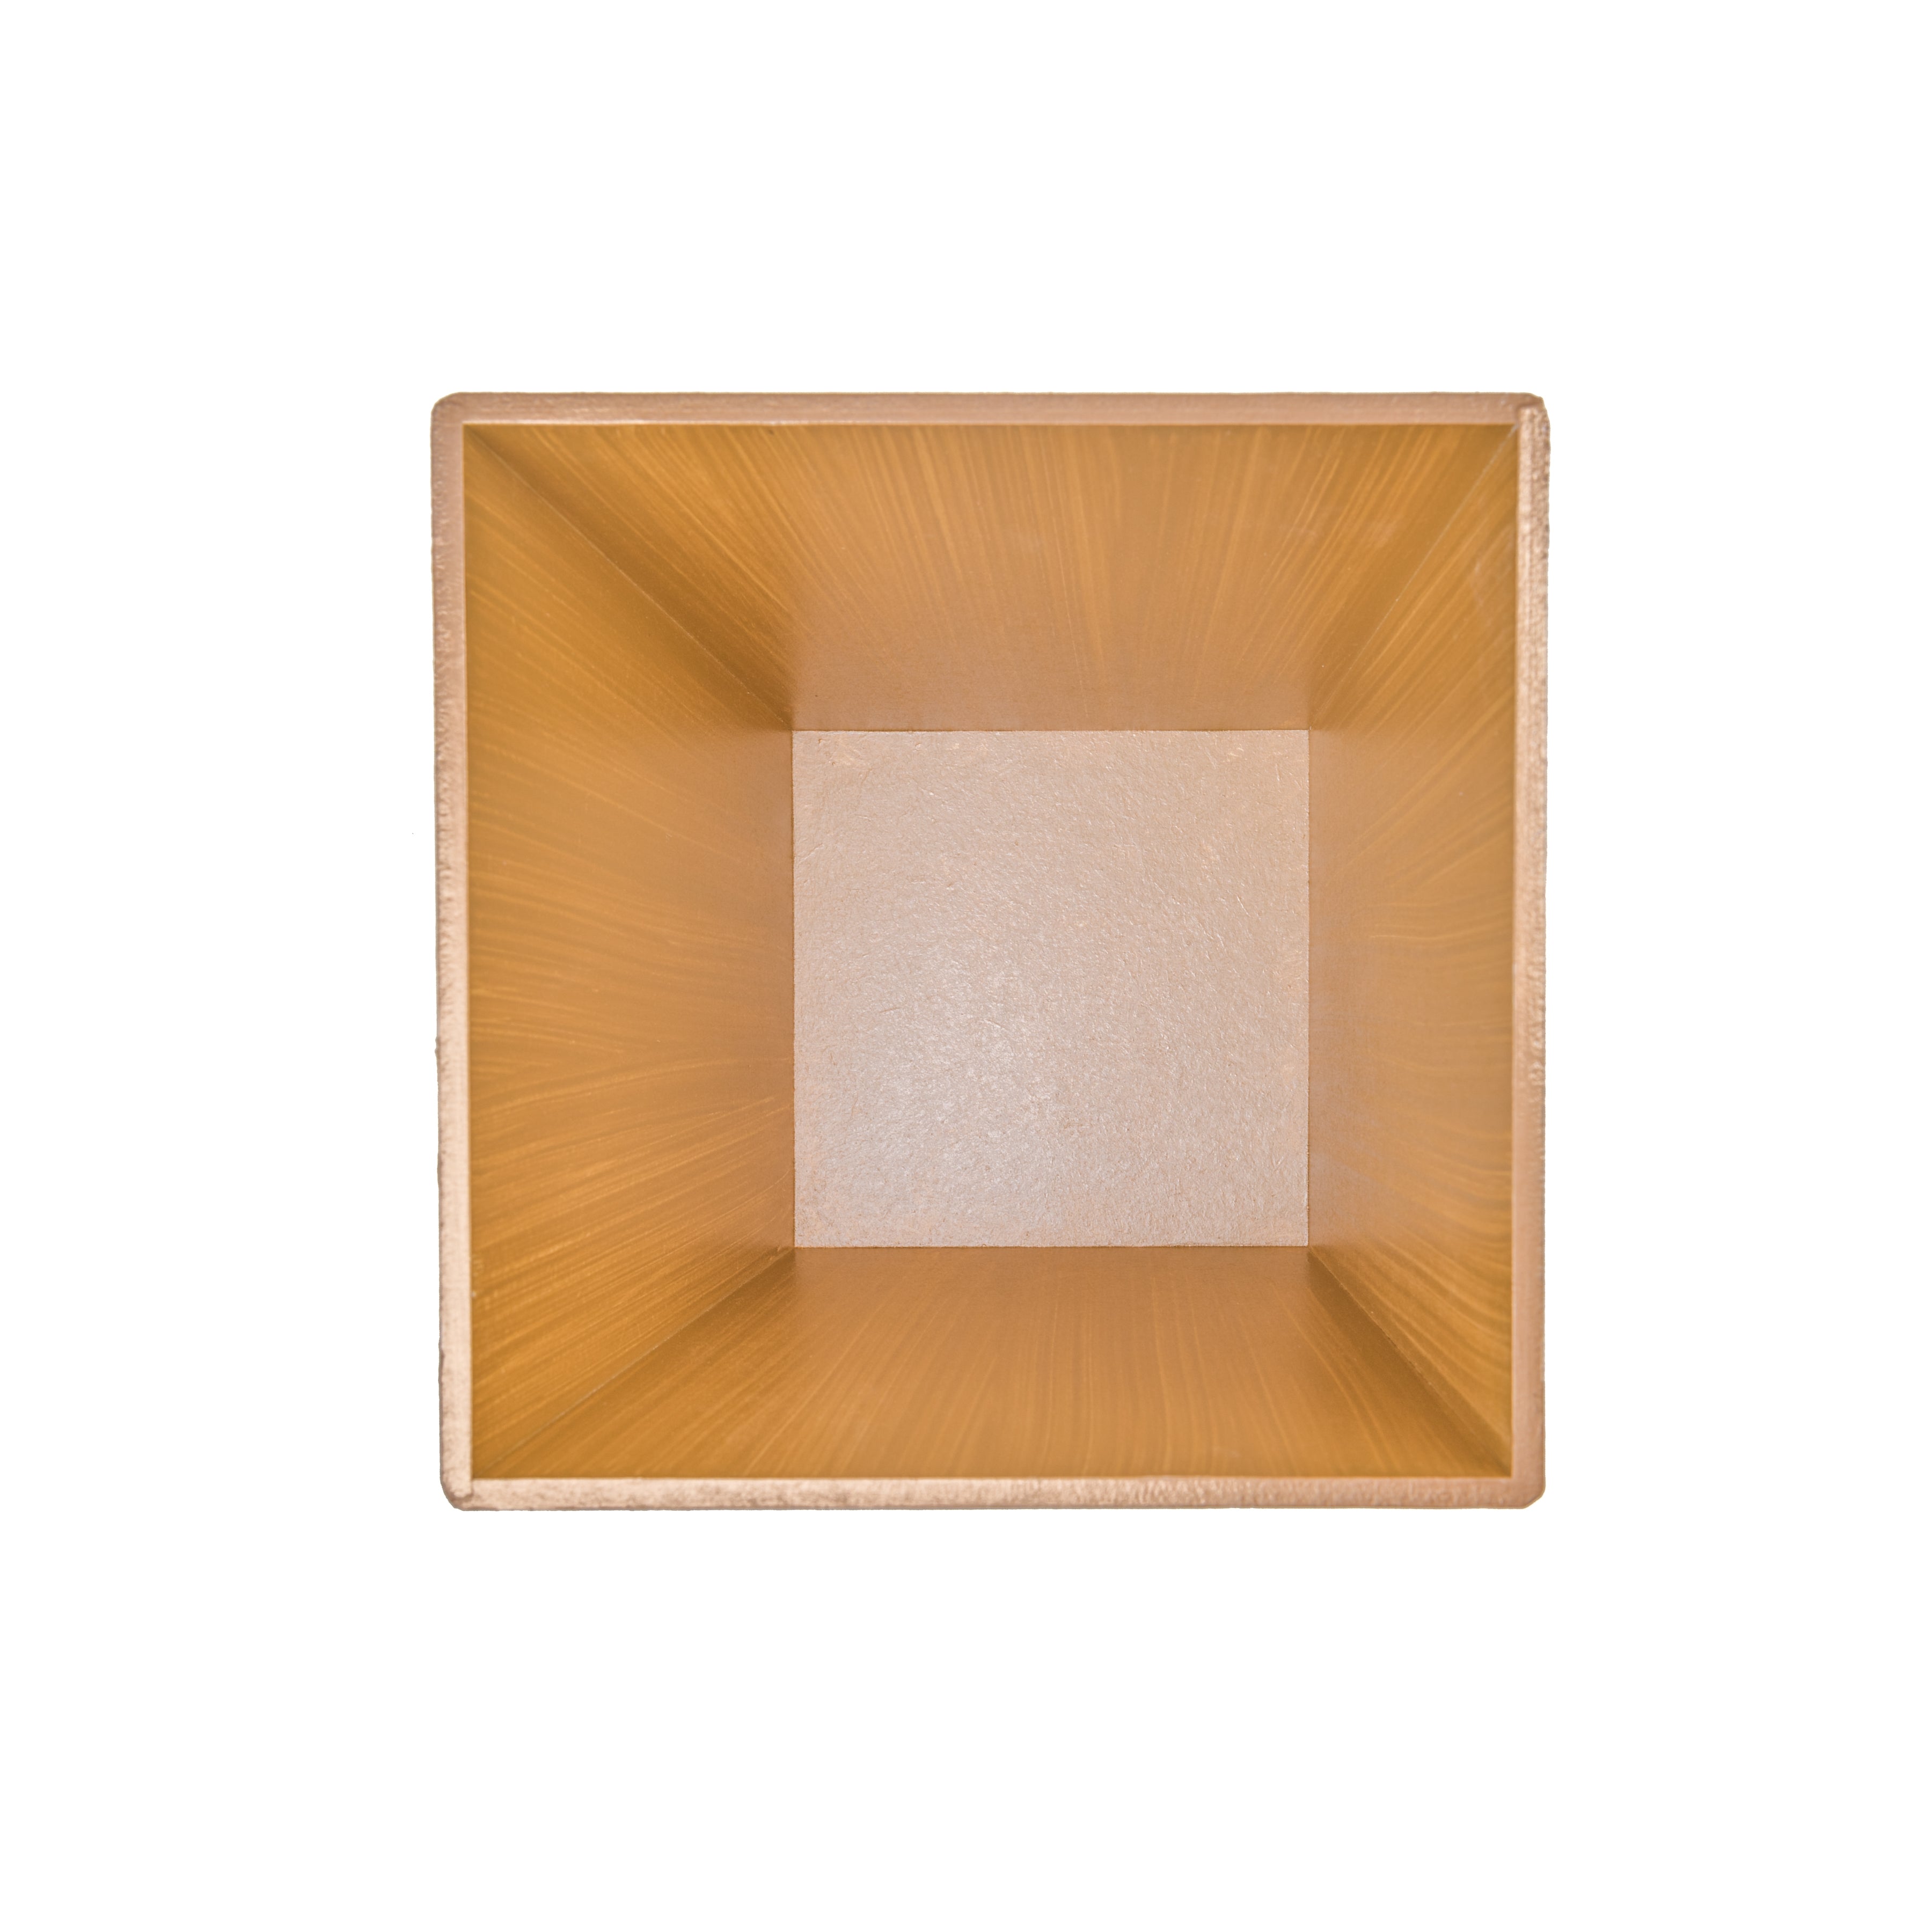 Gold Acorn Tissue Box Cover & Waste Paper Bin Set